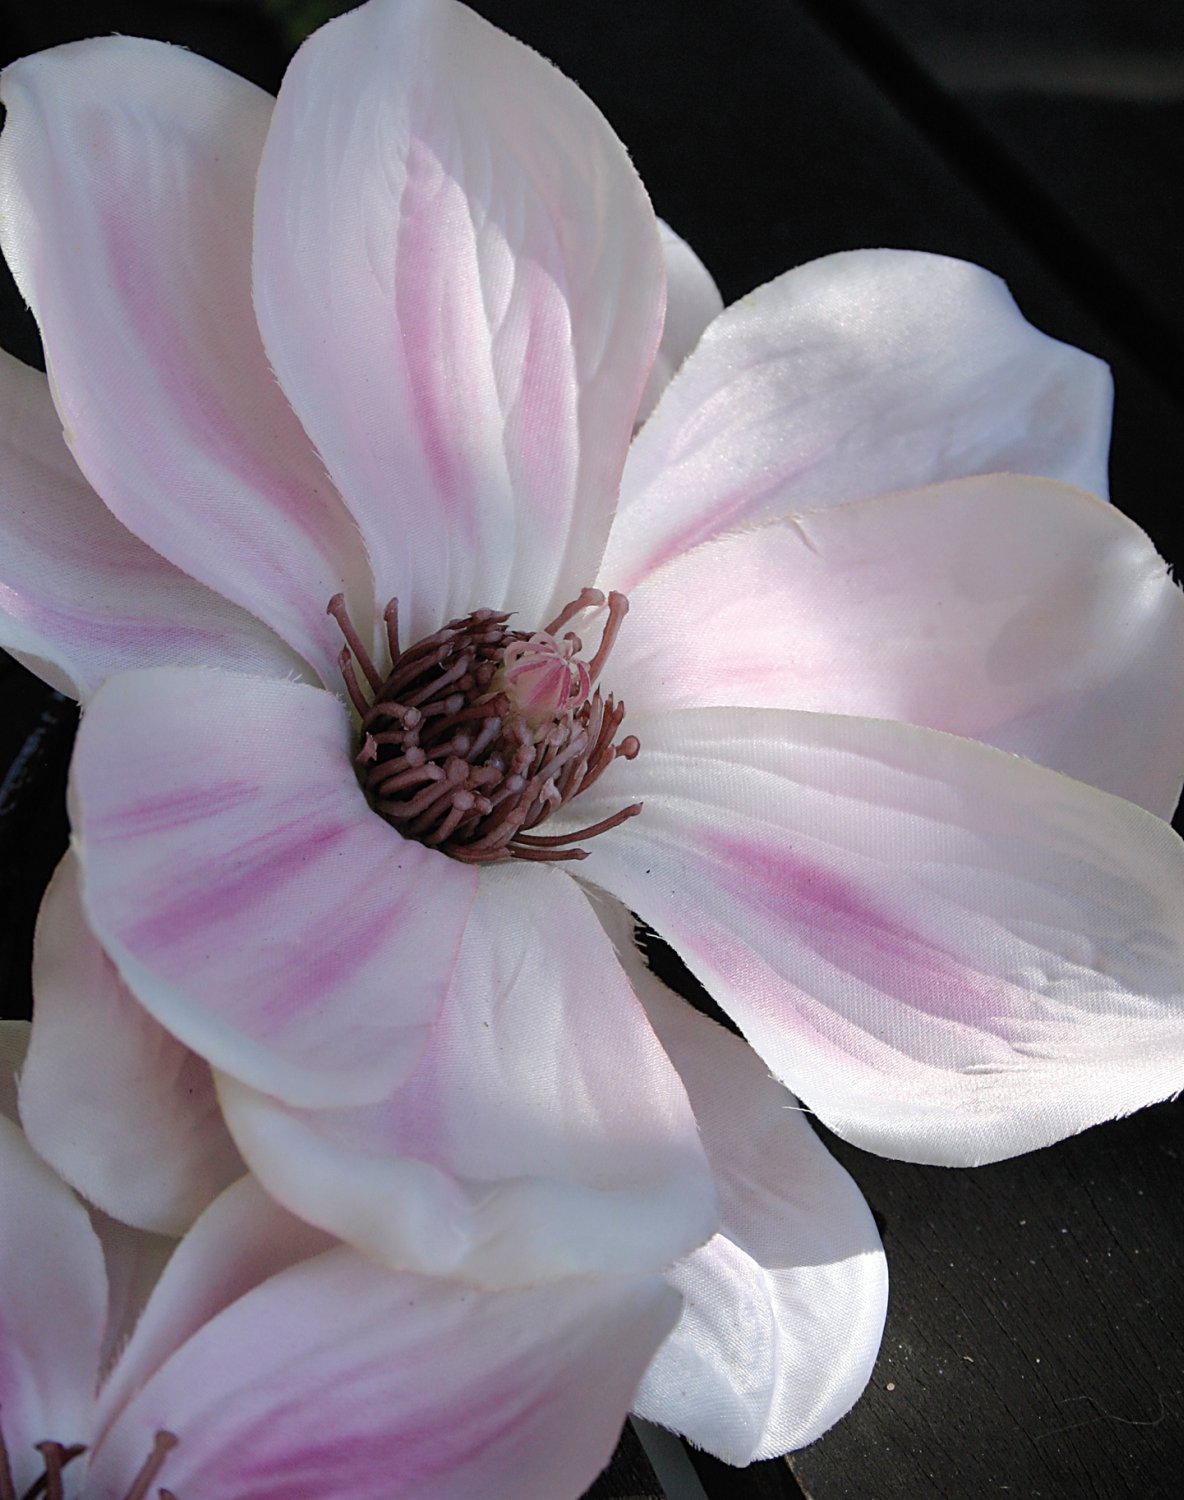 Artificial magnolia flower spray, 80 cm, pink